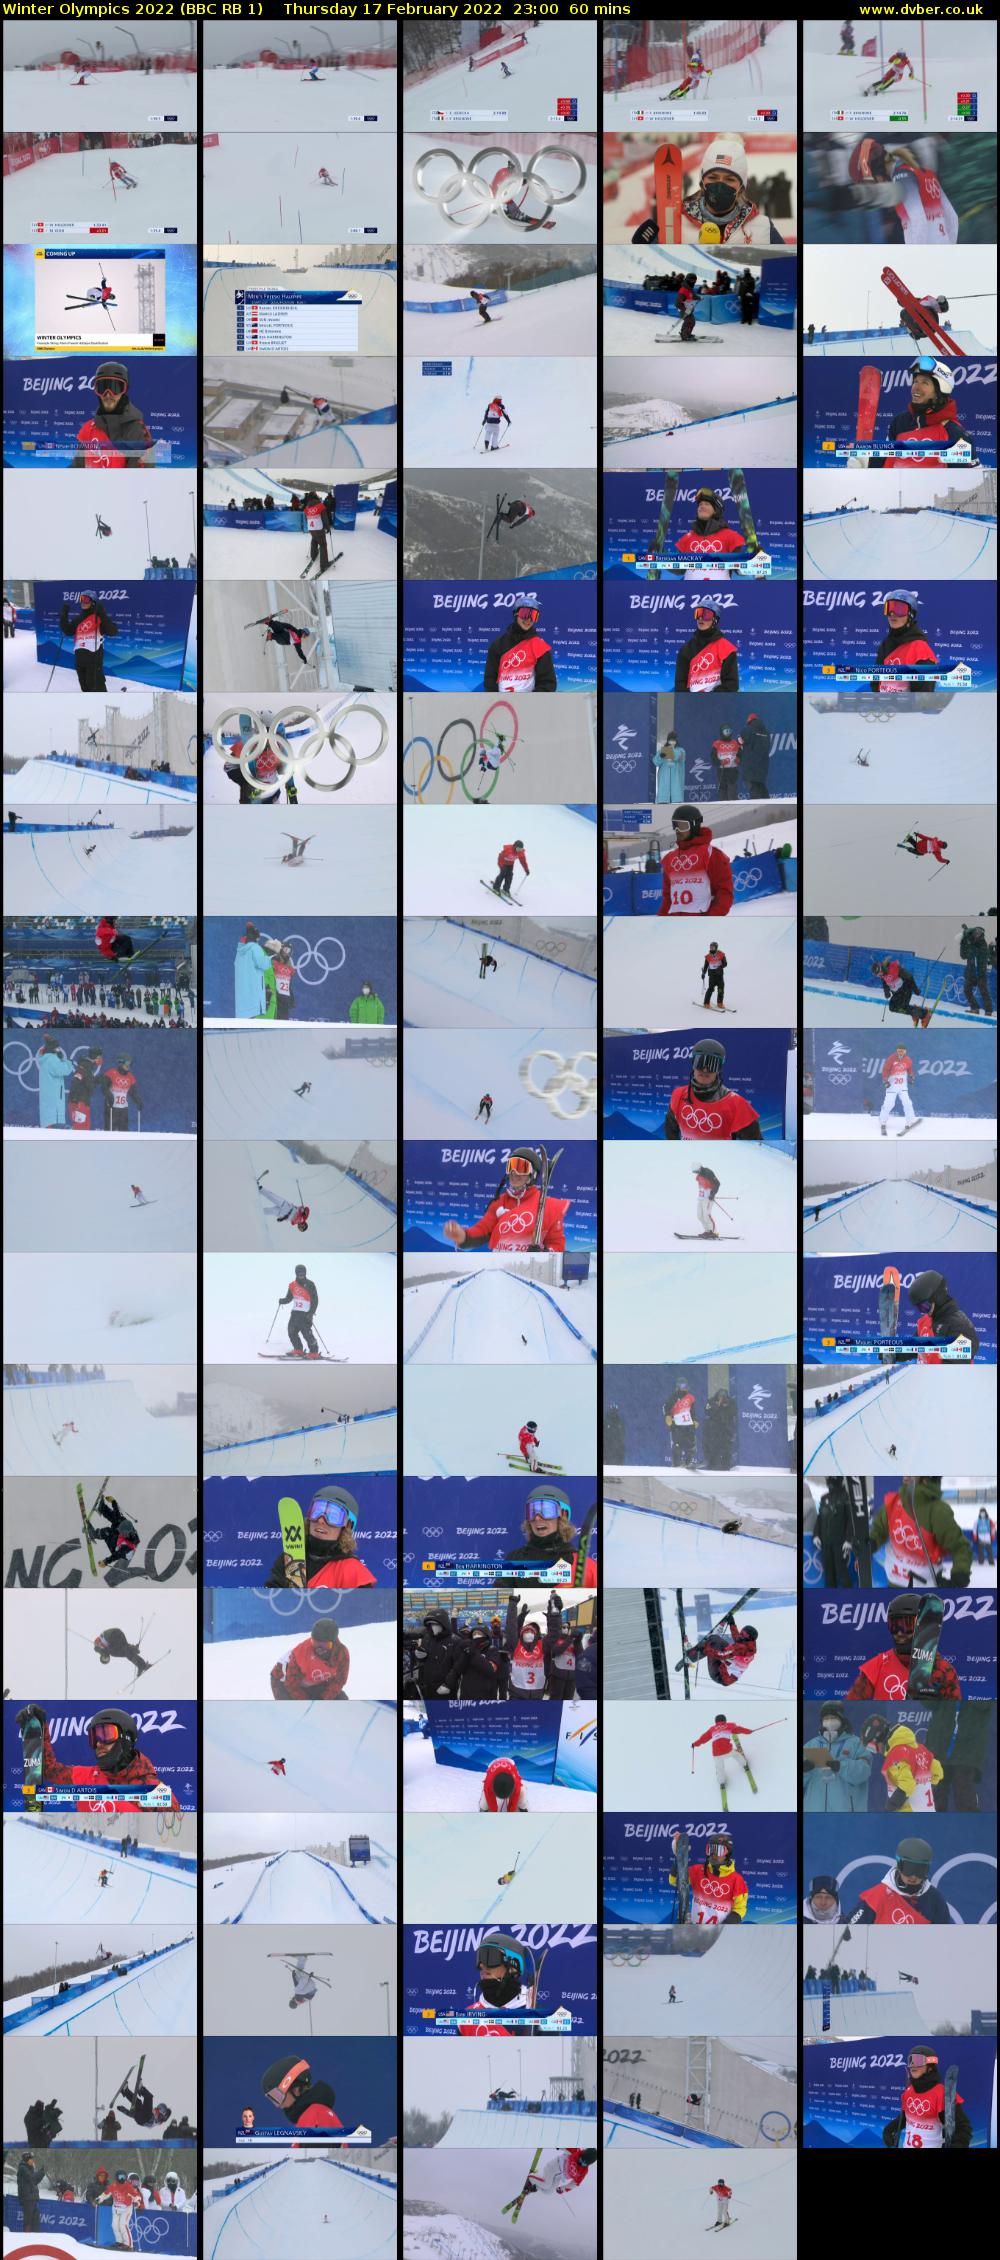 Winter Olympics 2022 (BBC RB 1) Thursday 17 February 2022 23:00 - 00:00